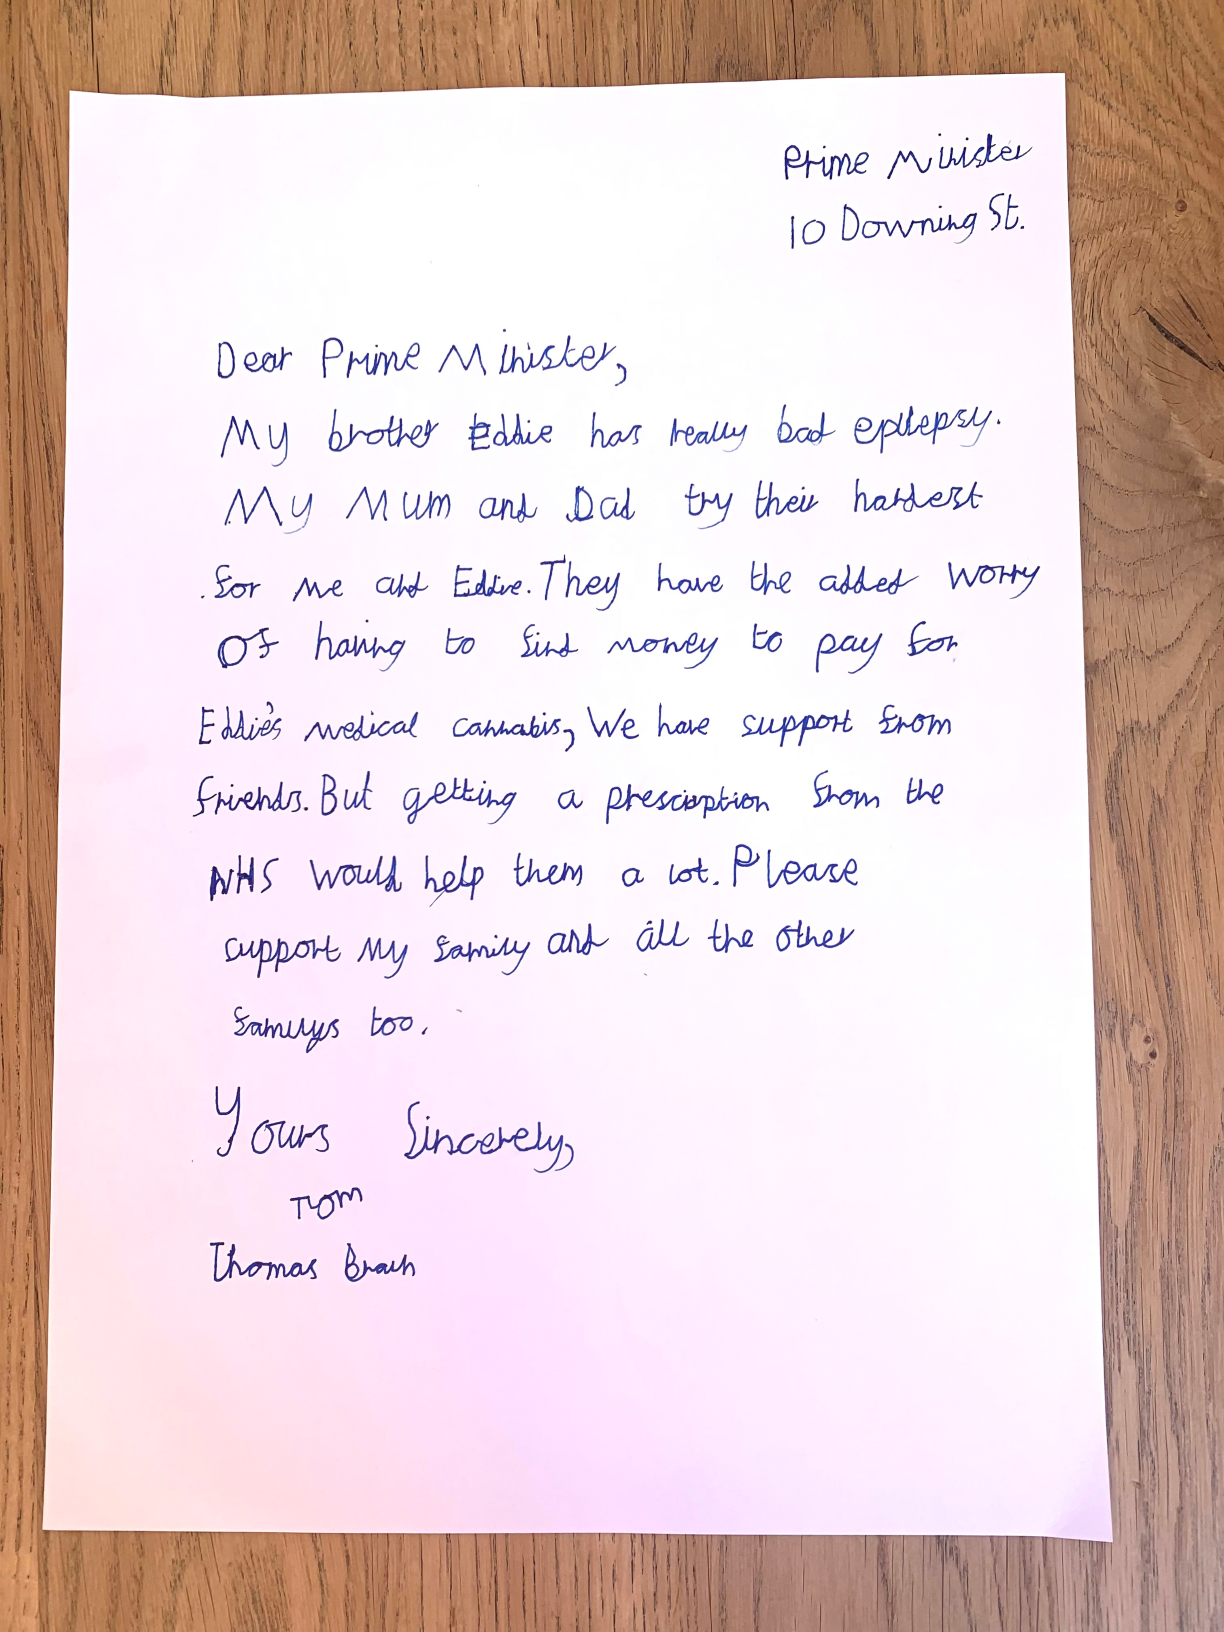 Letter written by Thomas Braun